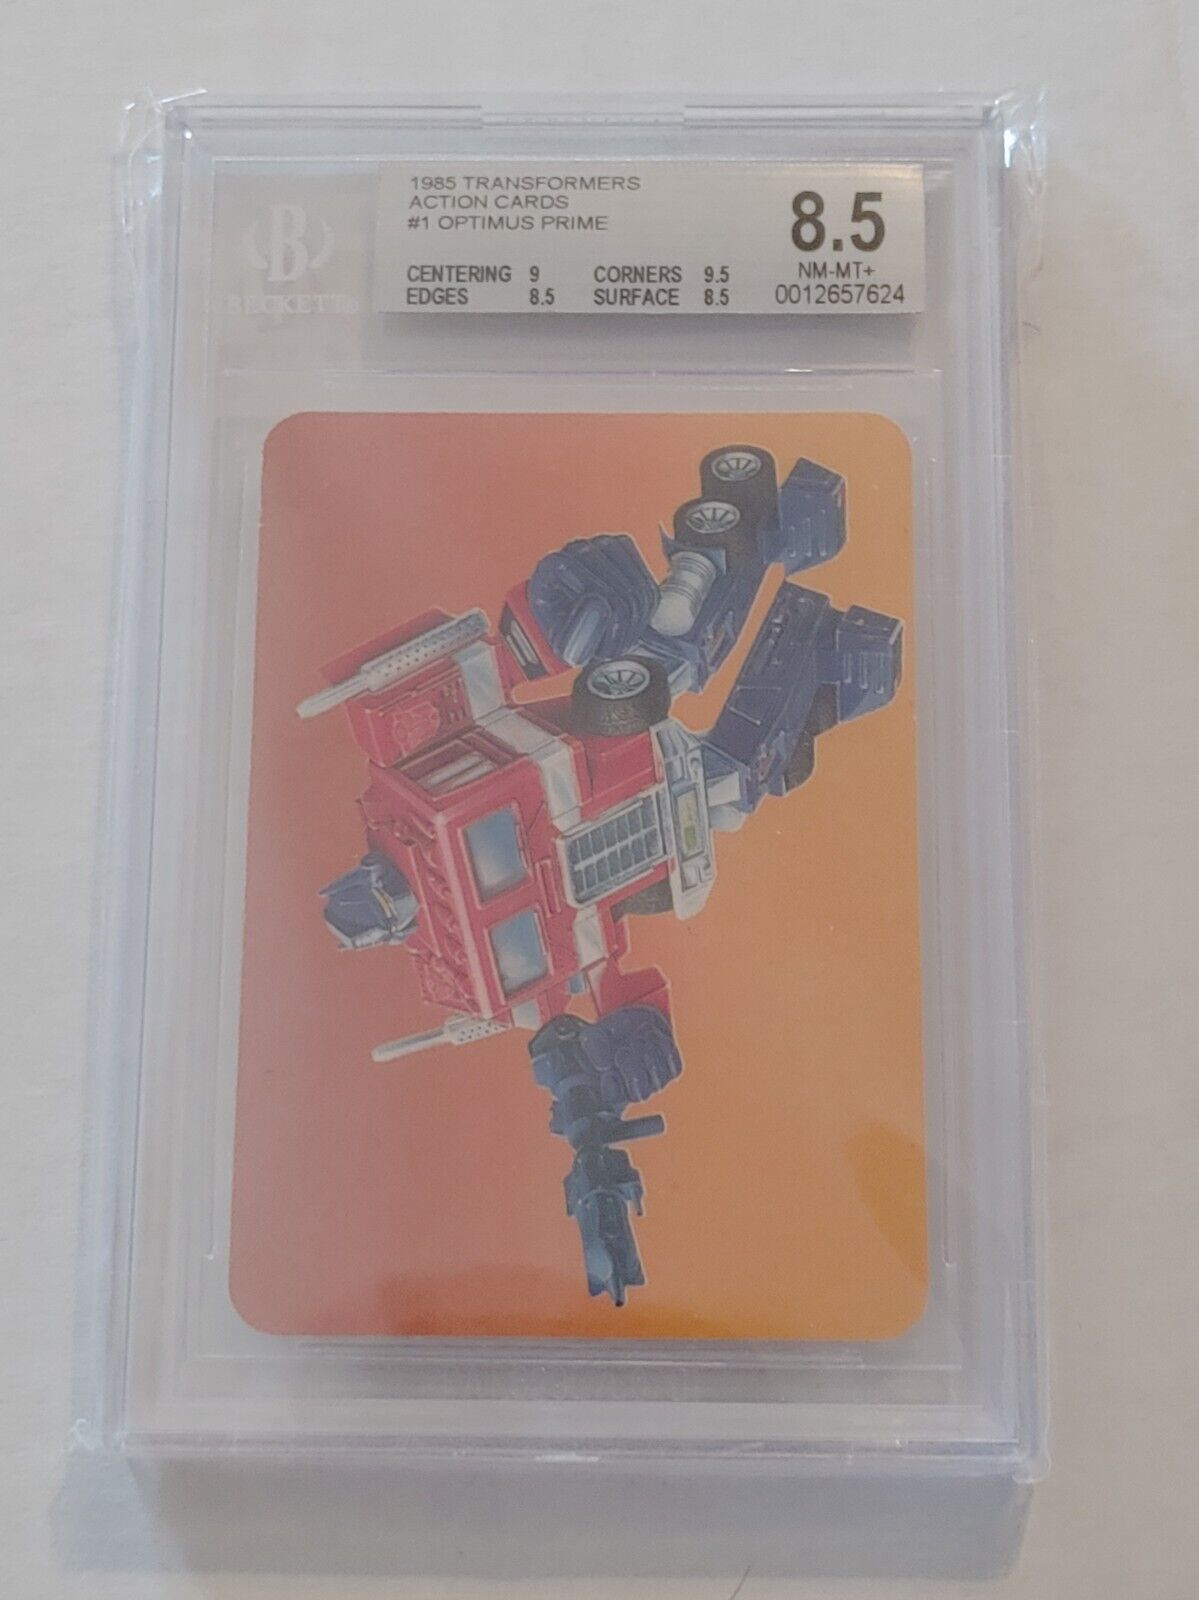 1985 Beckett graded Transformers Action Cards